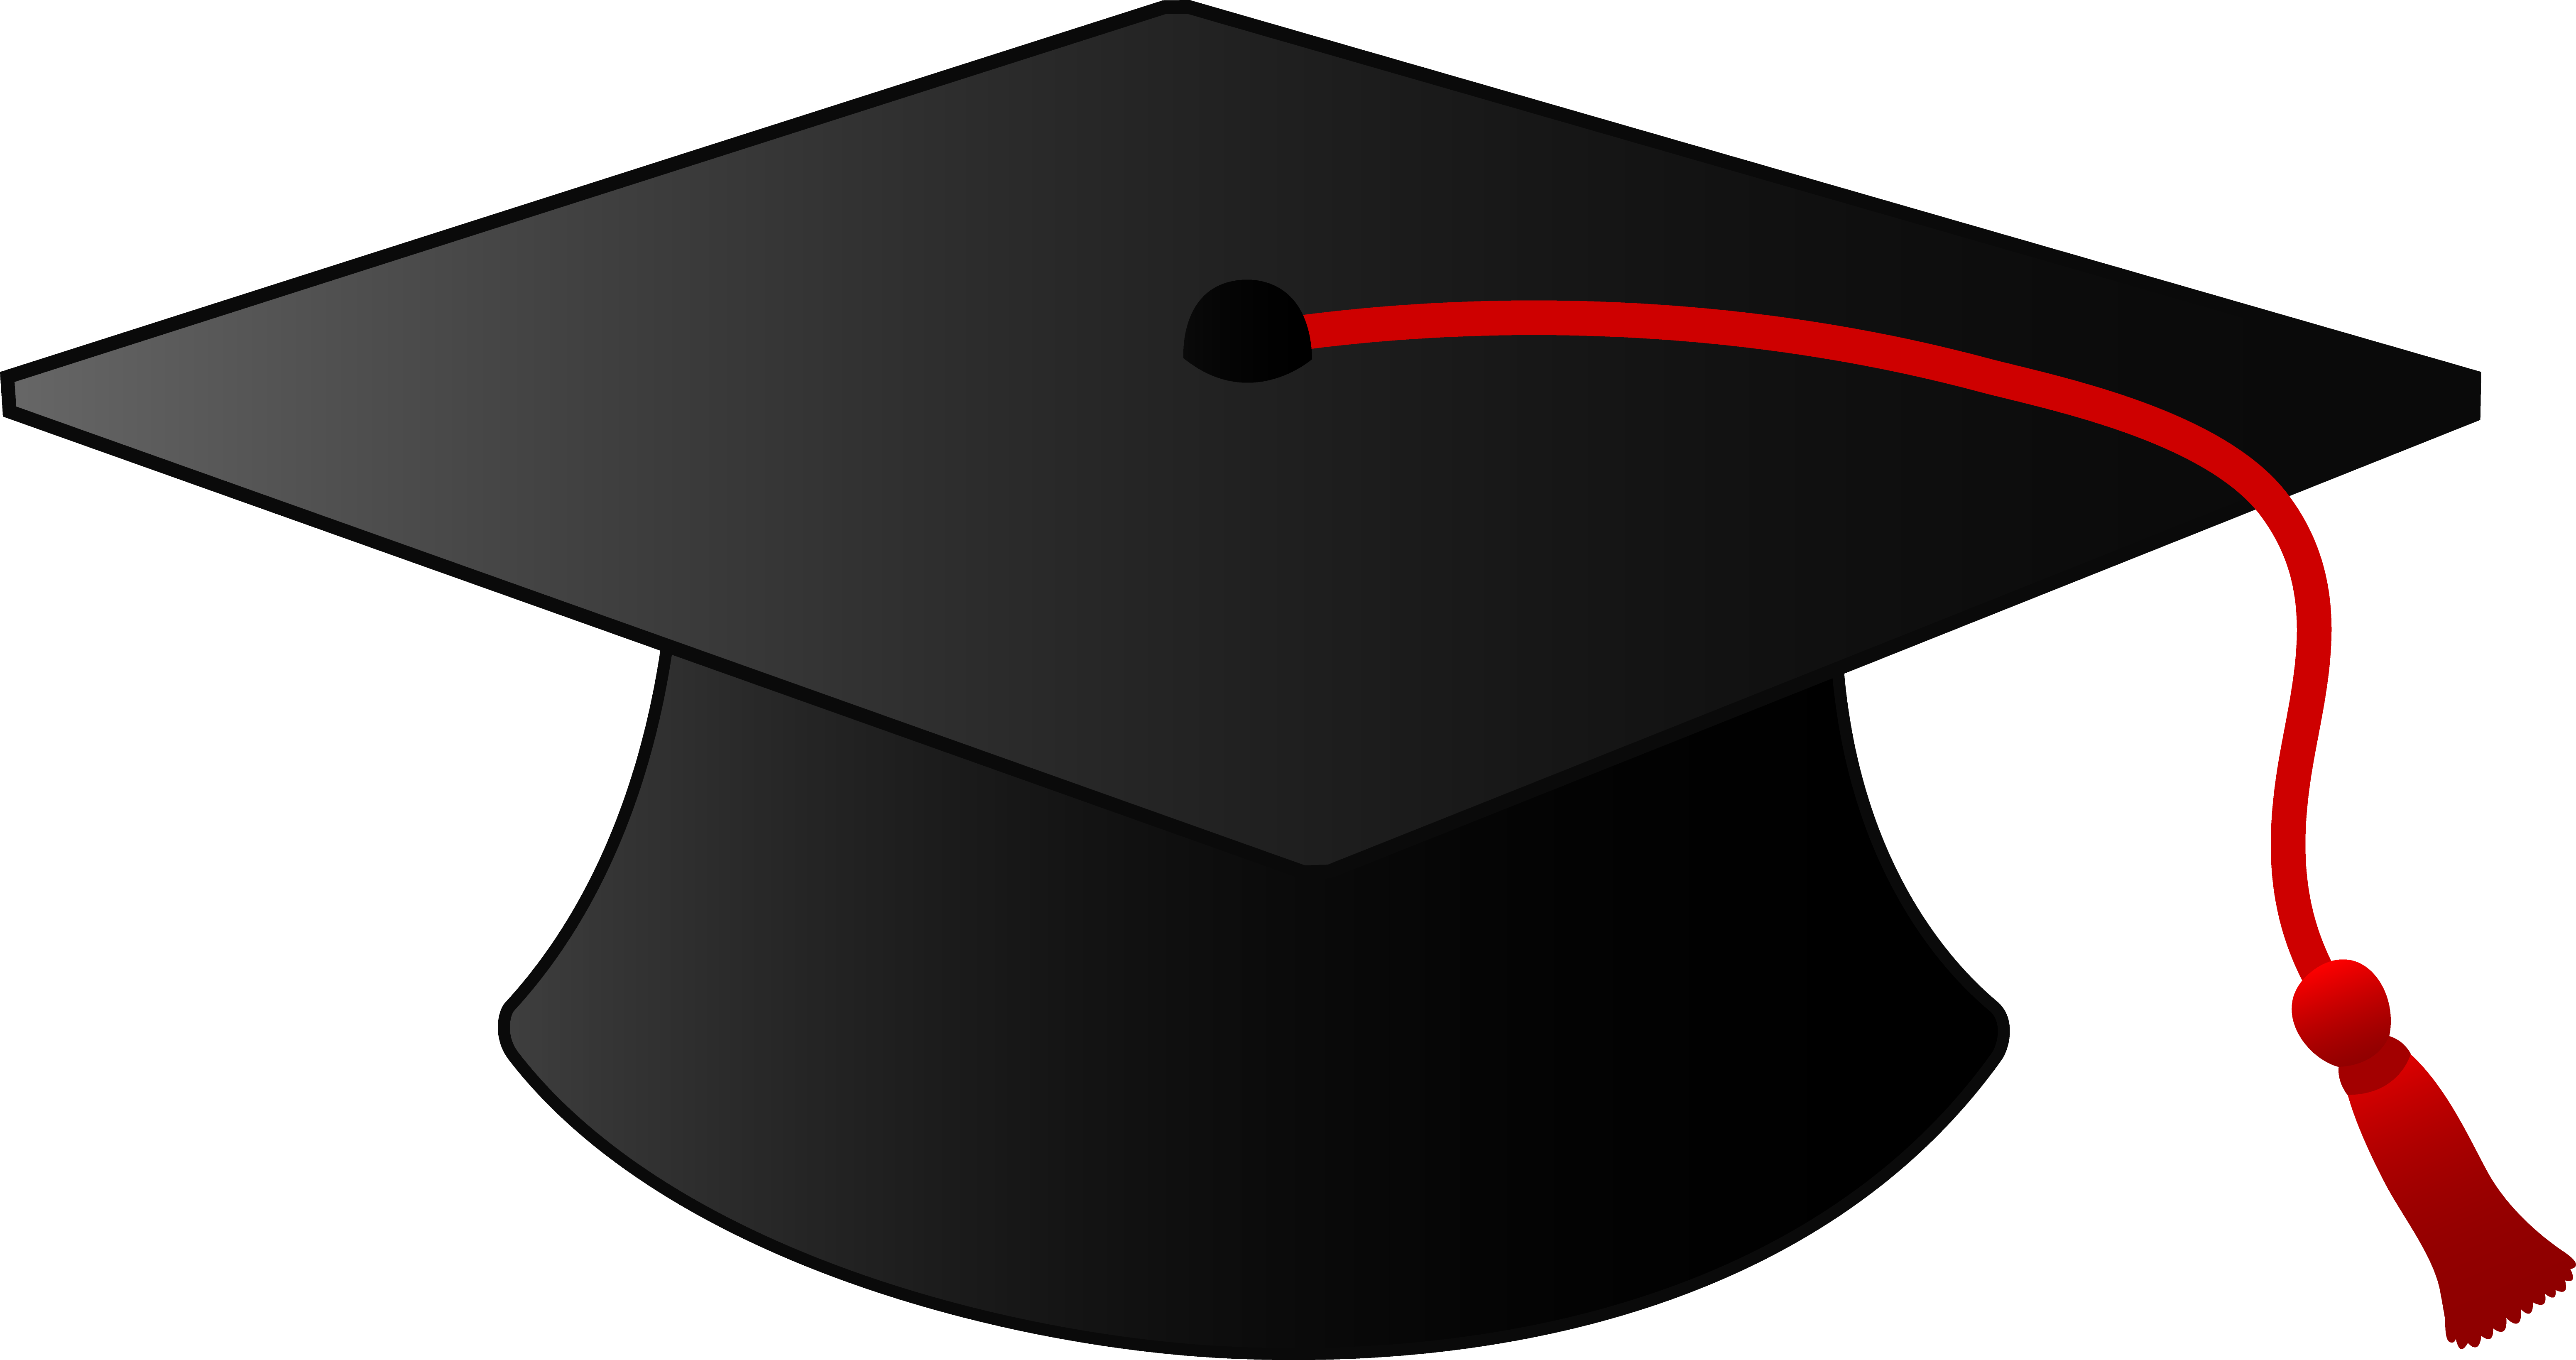 hats clipart degree